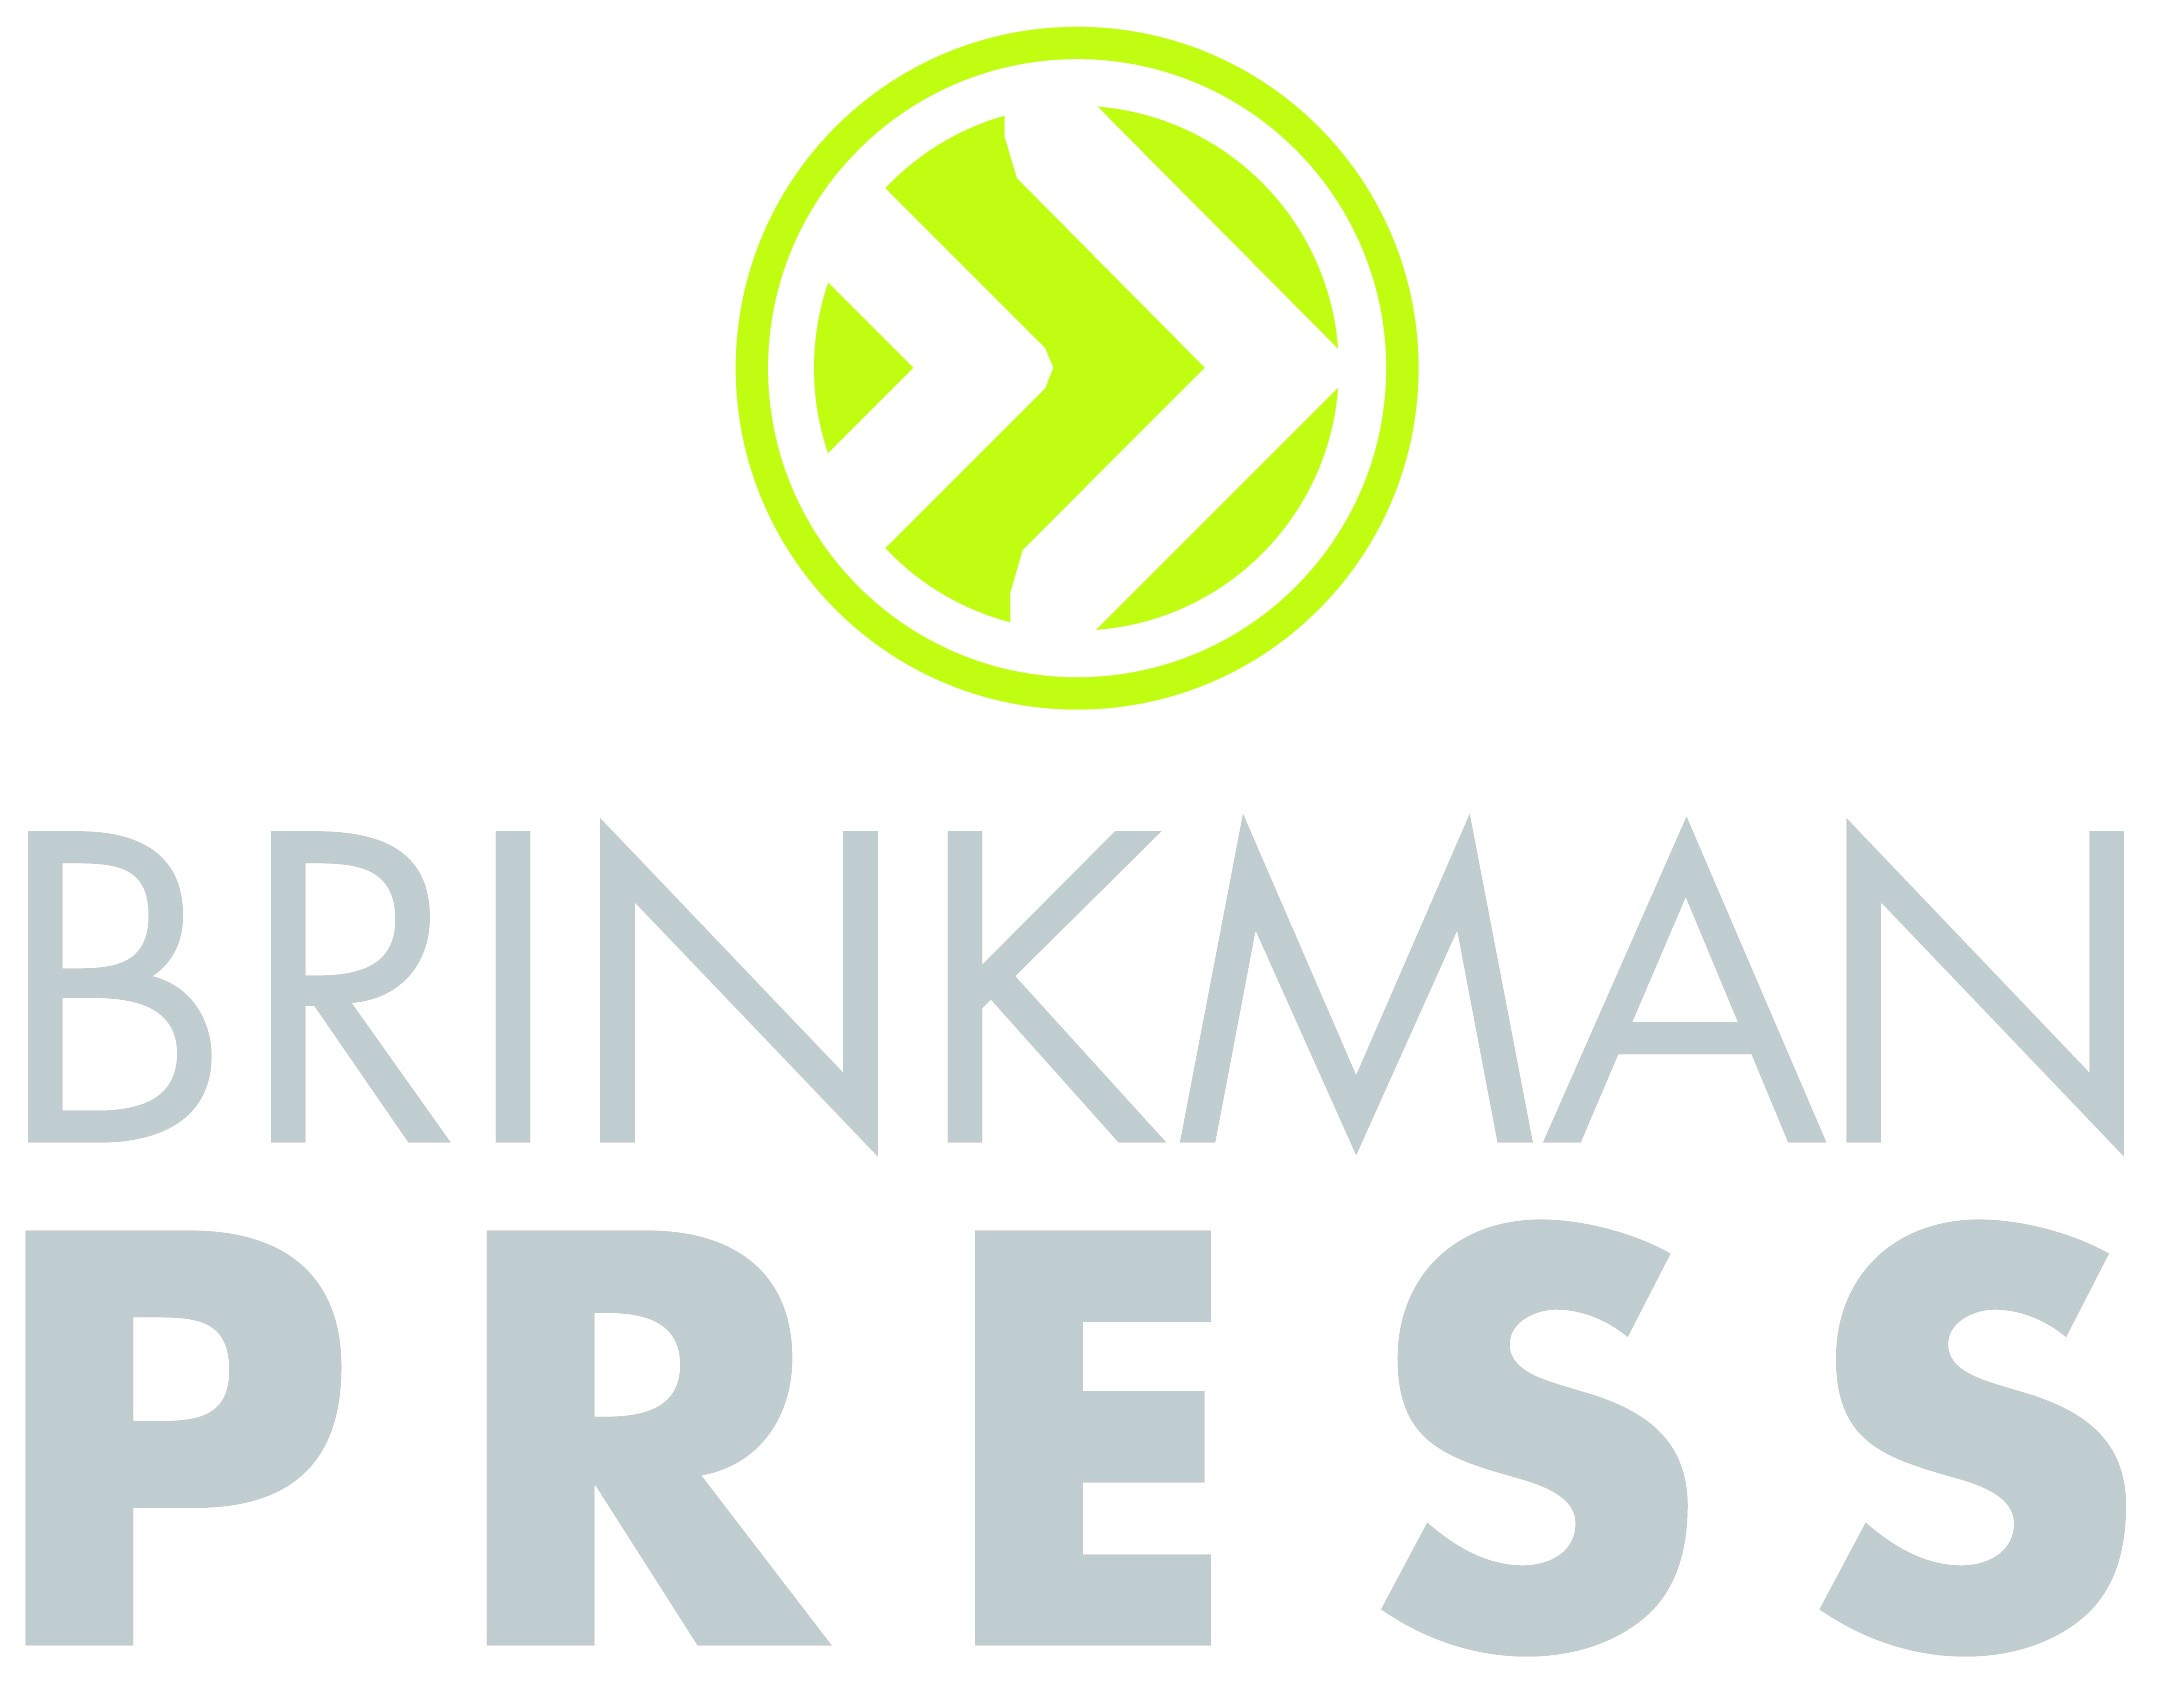 Brinkman Press